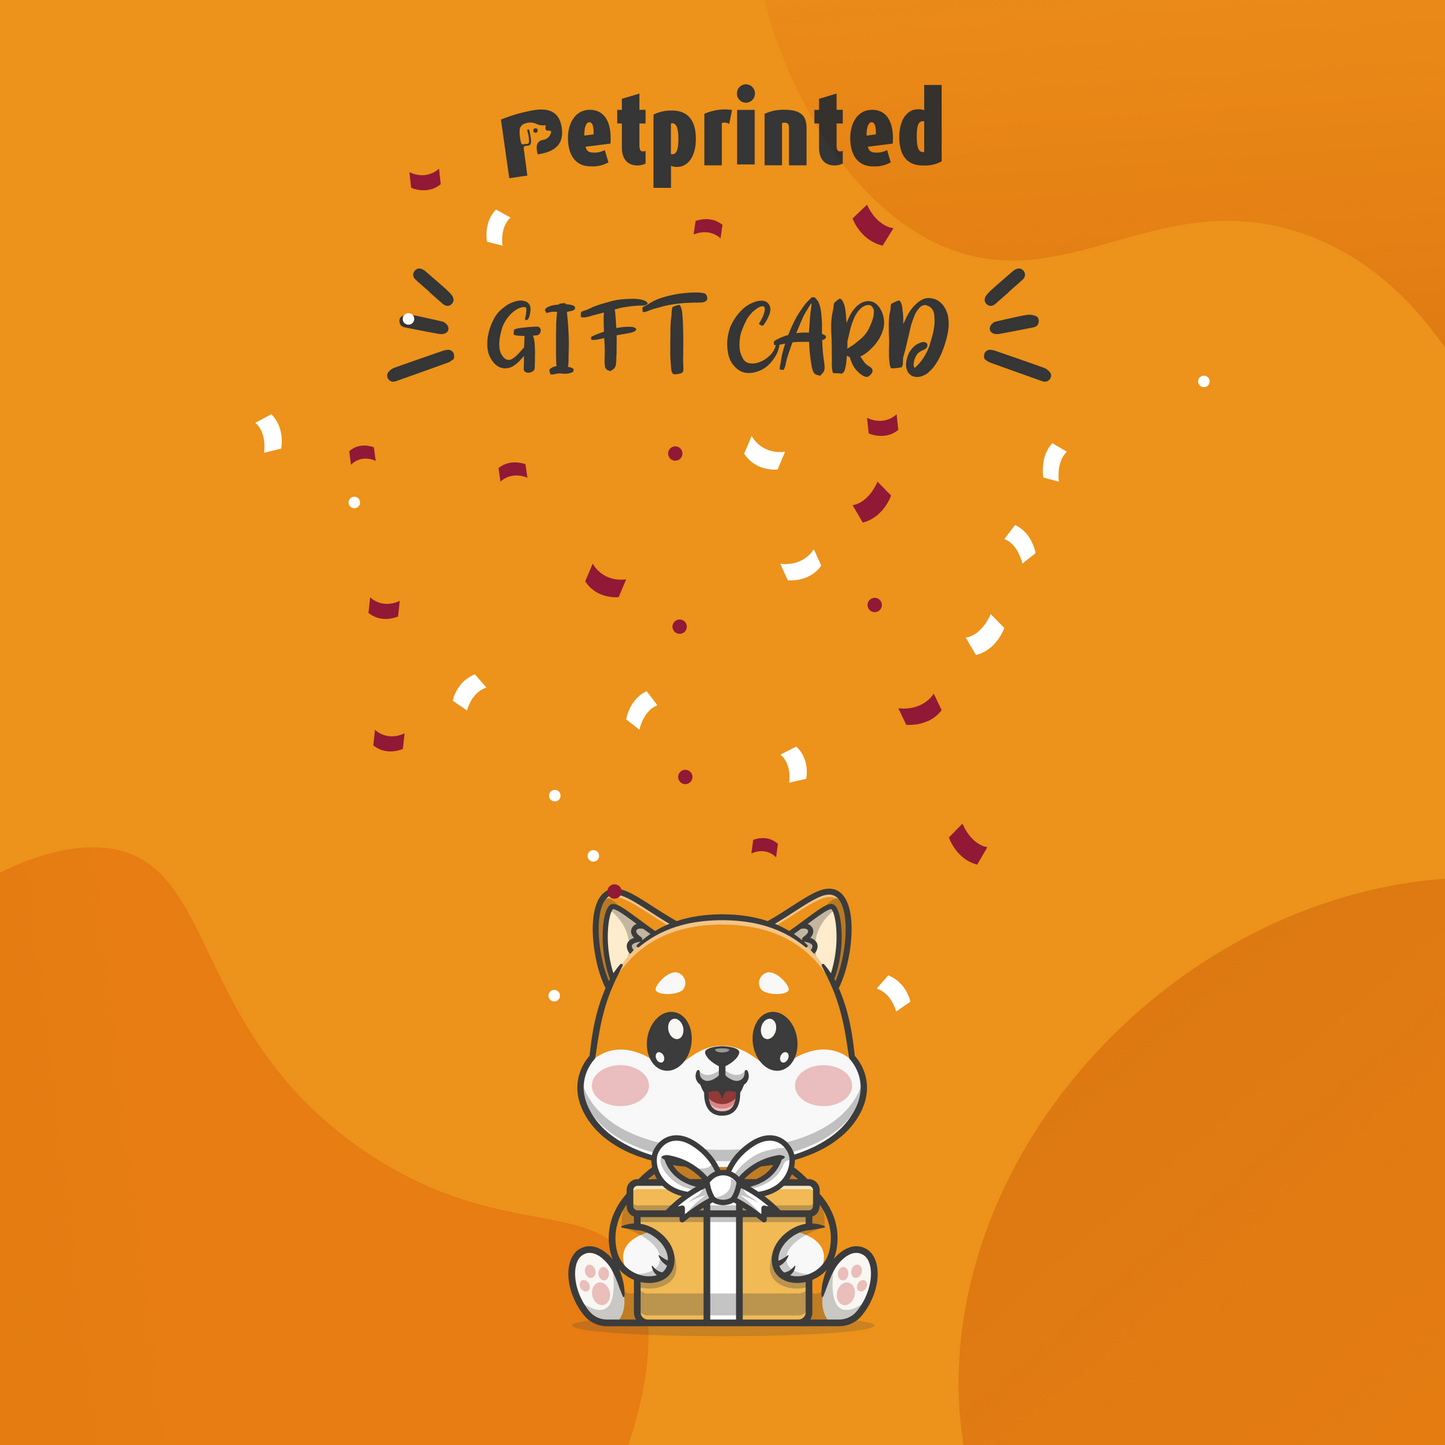 Pet Printed gift card